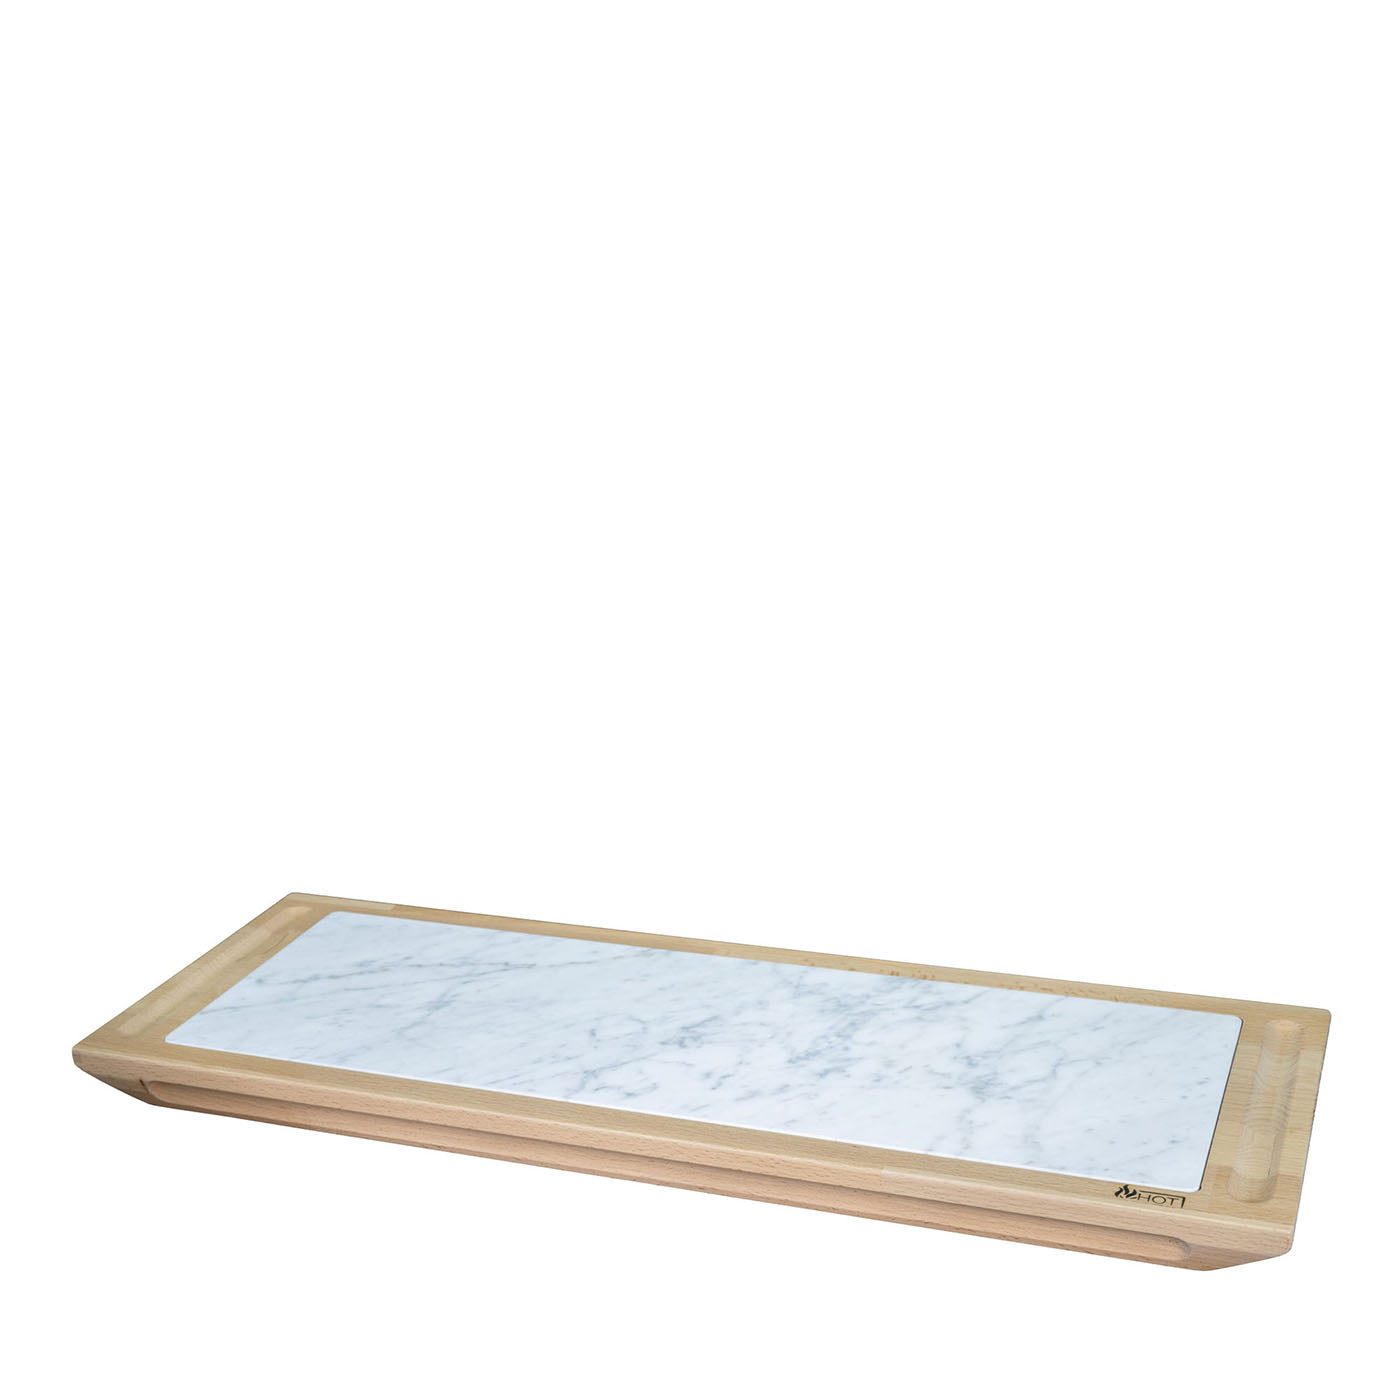 Flaches großes Statuario-Tablett mit Holzsockel - Hauptansicht